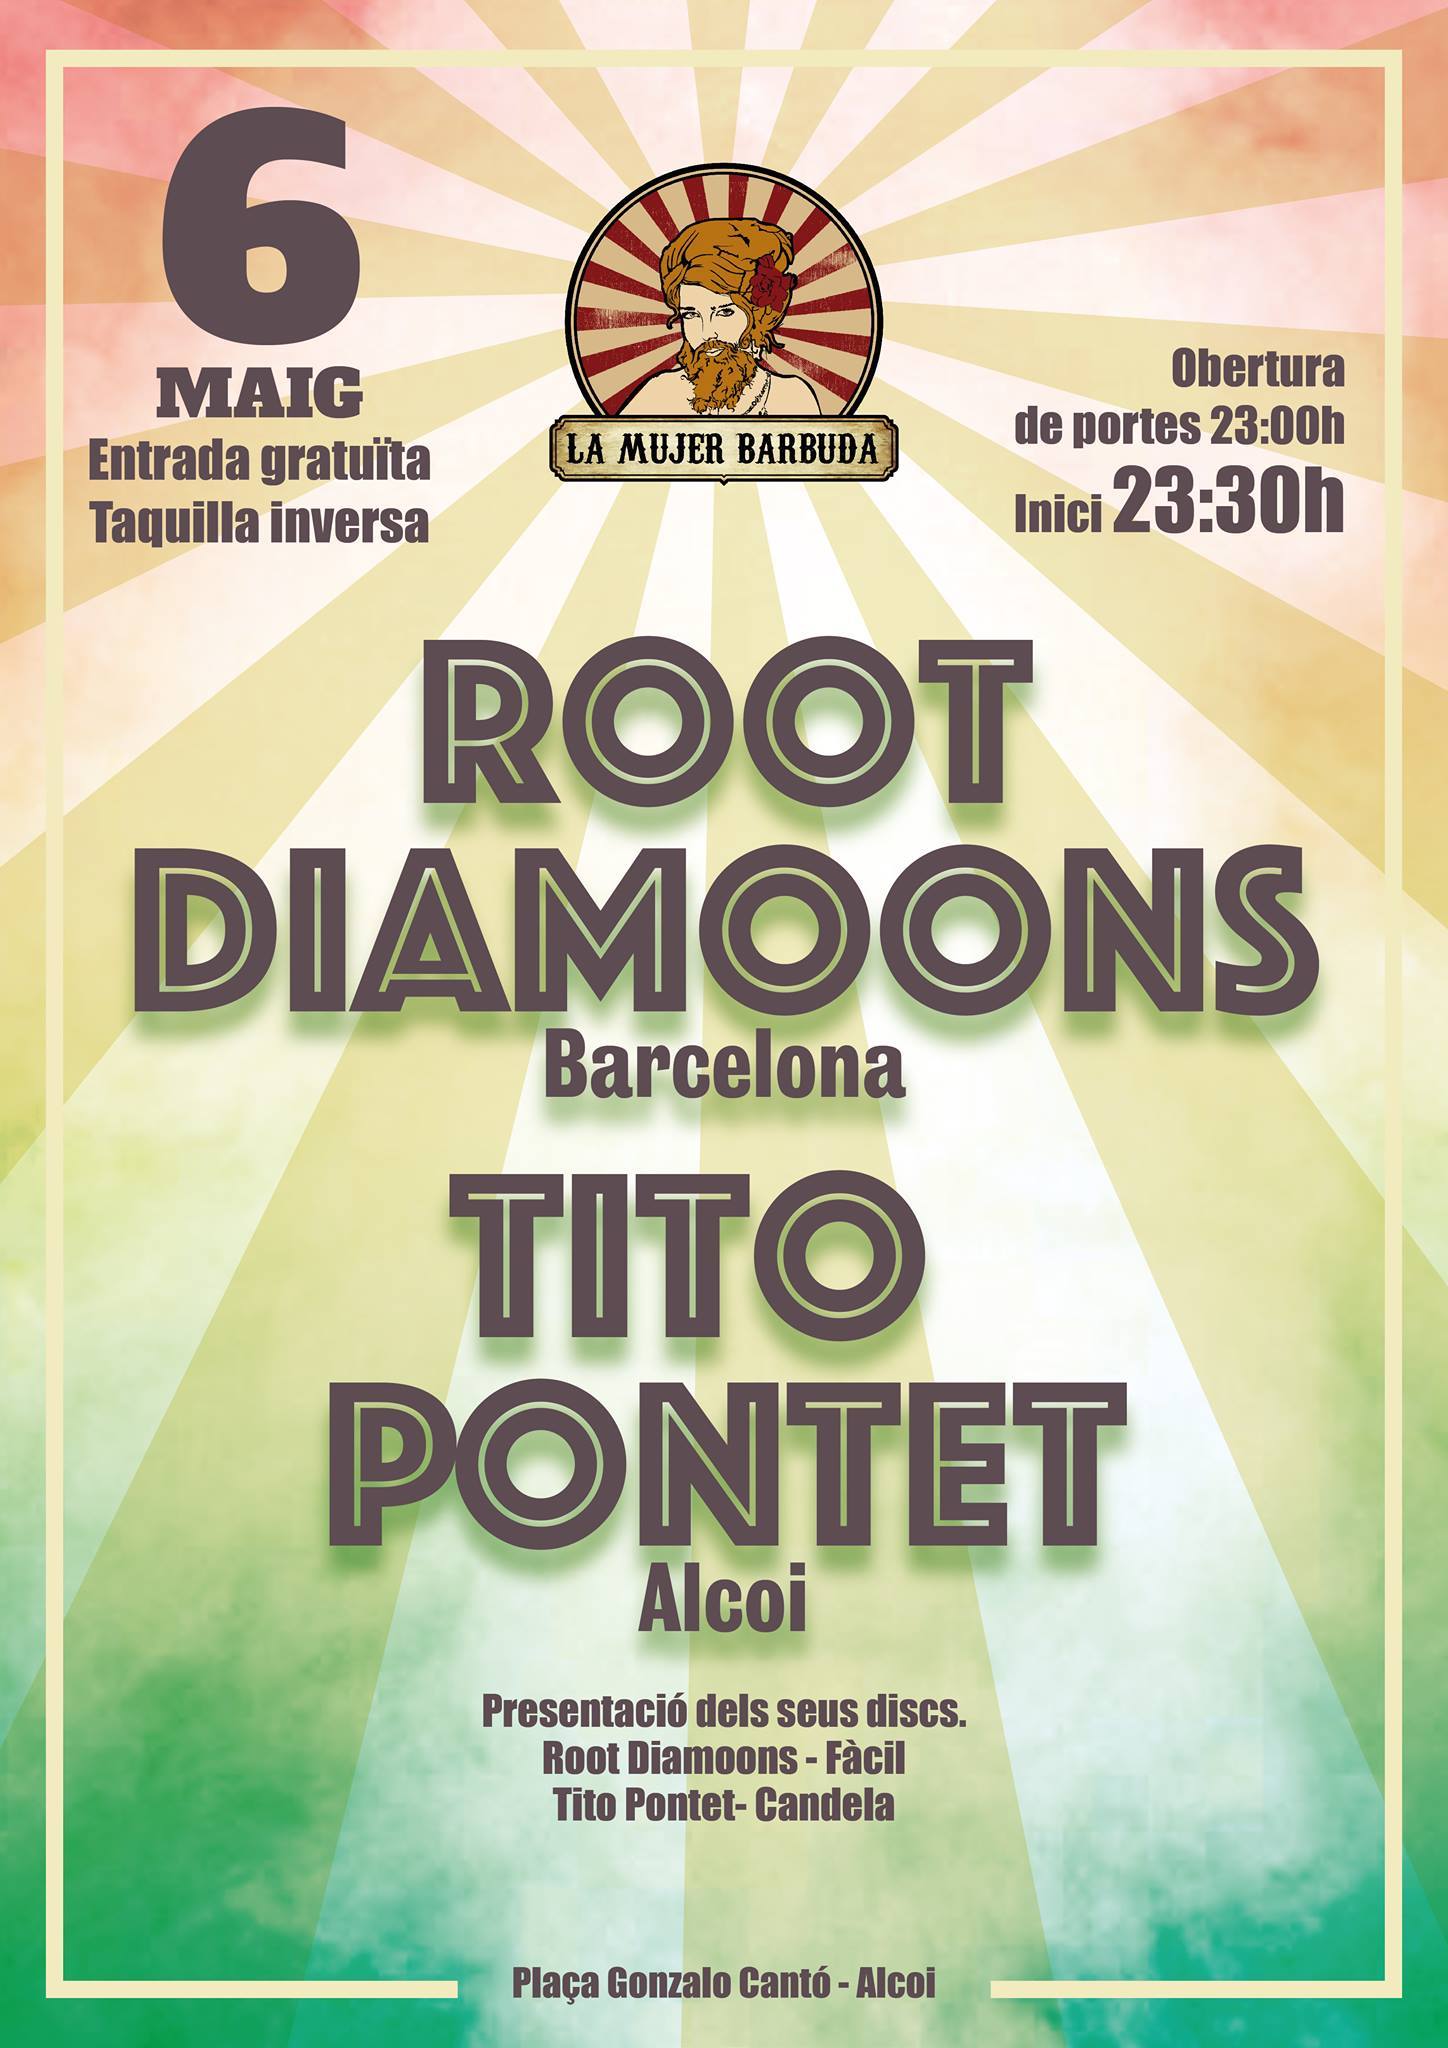 Root Diamoons + Tito Pontet a Alcoi